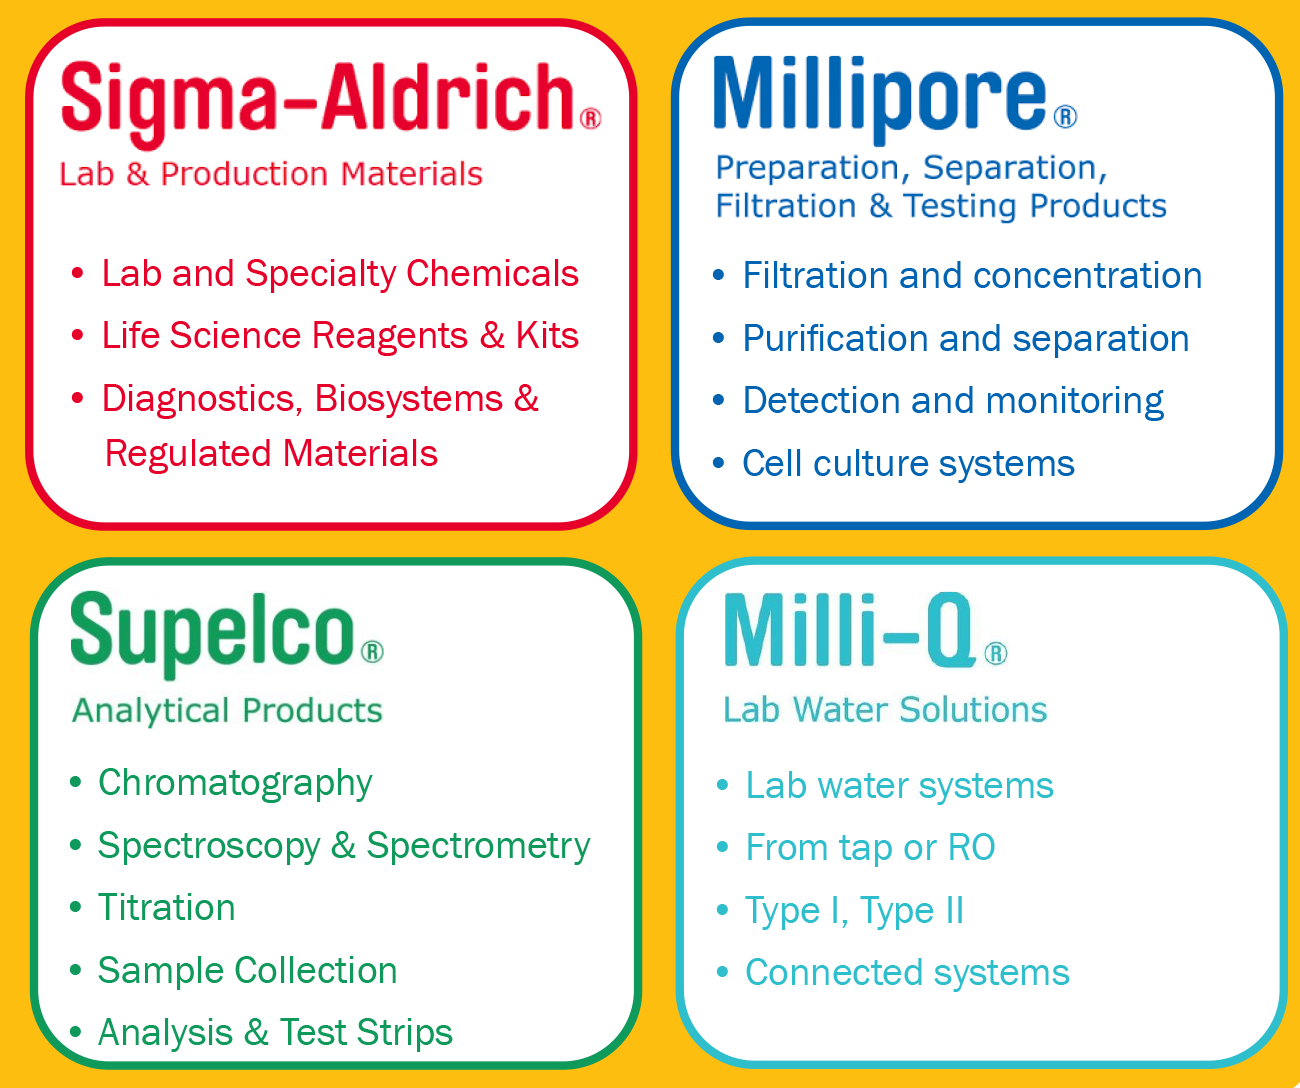 MilliporeSigma Product Lines offered through Neta